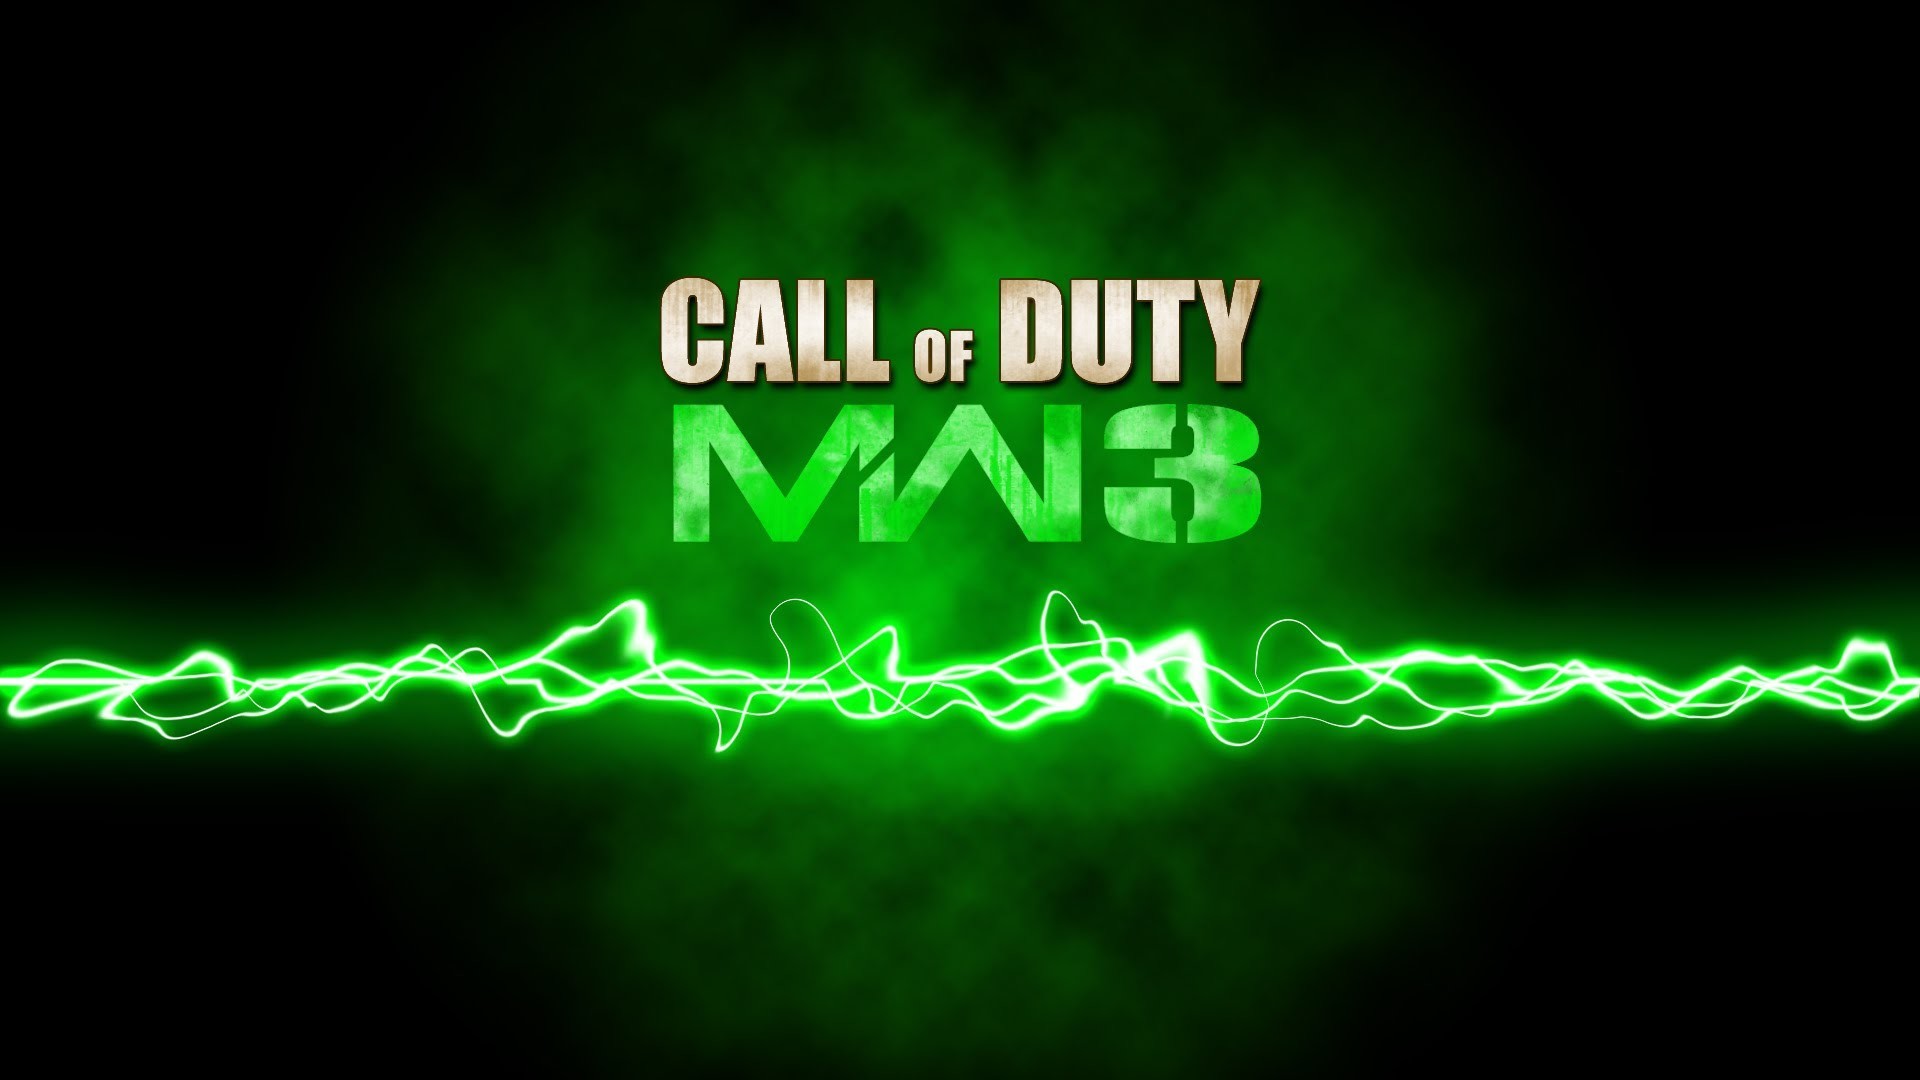 1920x1080 How to create Call of Duty Modern Warfare 3 wallpaper in AdobeÂ® PhotoshopÂ®  software